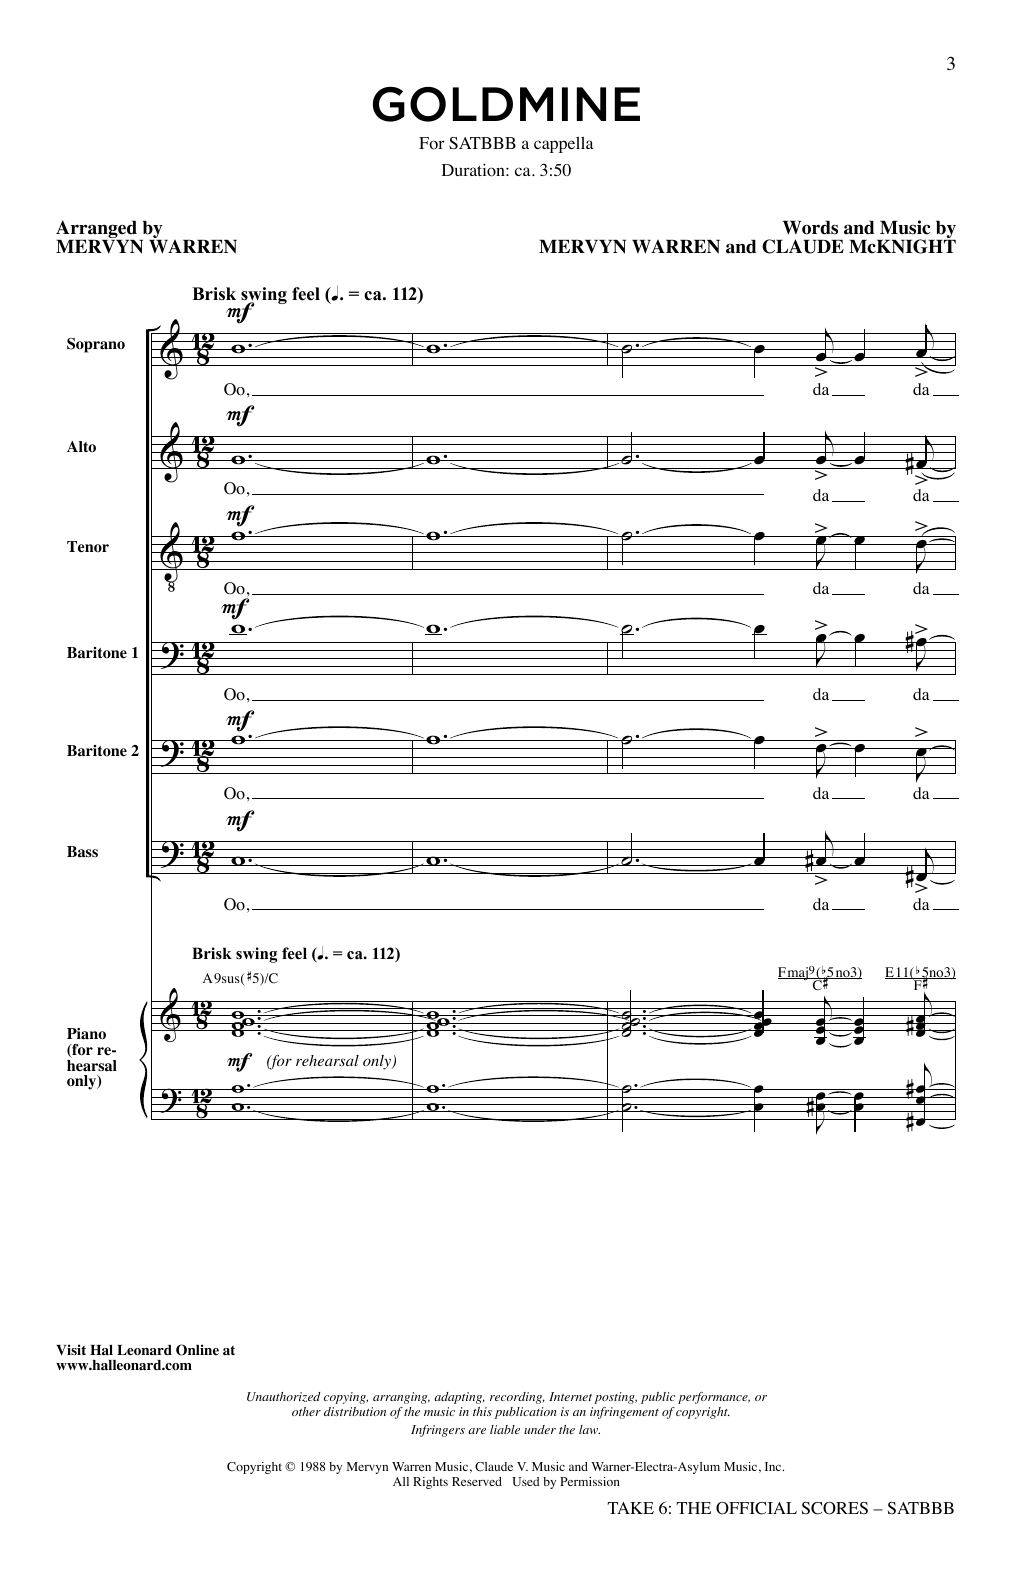 Take 6 Gold Mine (arr. Mervyn Warren) sheet music notes and chords arranged for SATB Choir